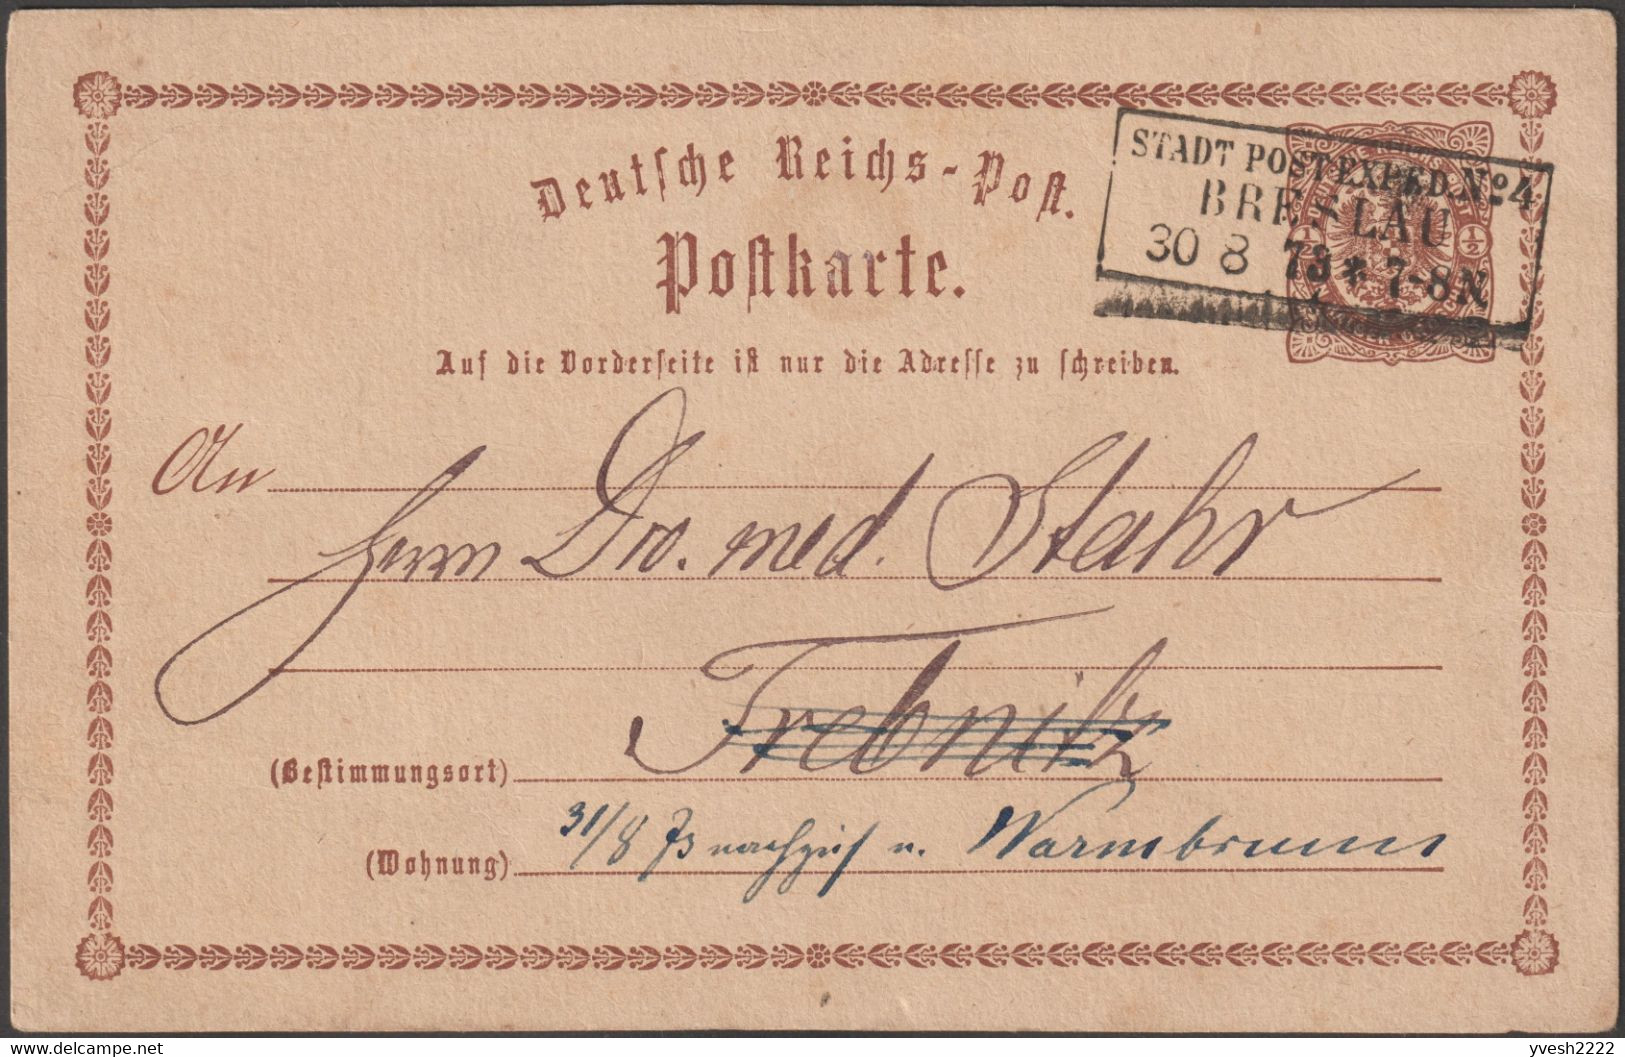 Pologne / Allemagne 1873. Entier Postal Oblitéré Stadt Post Exped. N° 4 - Breslau 30 8 73  7-8 N  Wrocław - Macchine Per Obliterare (EMA)